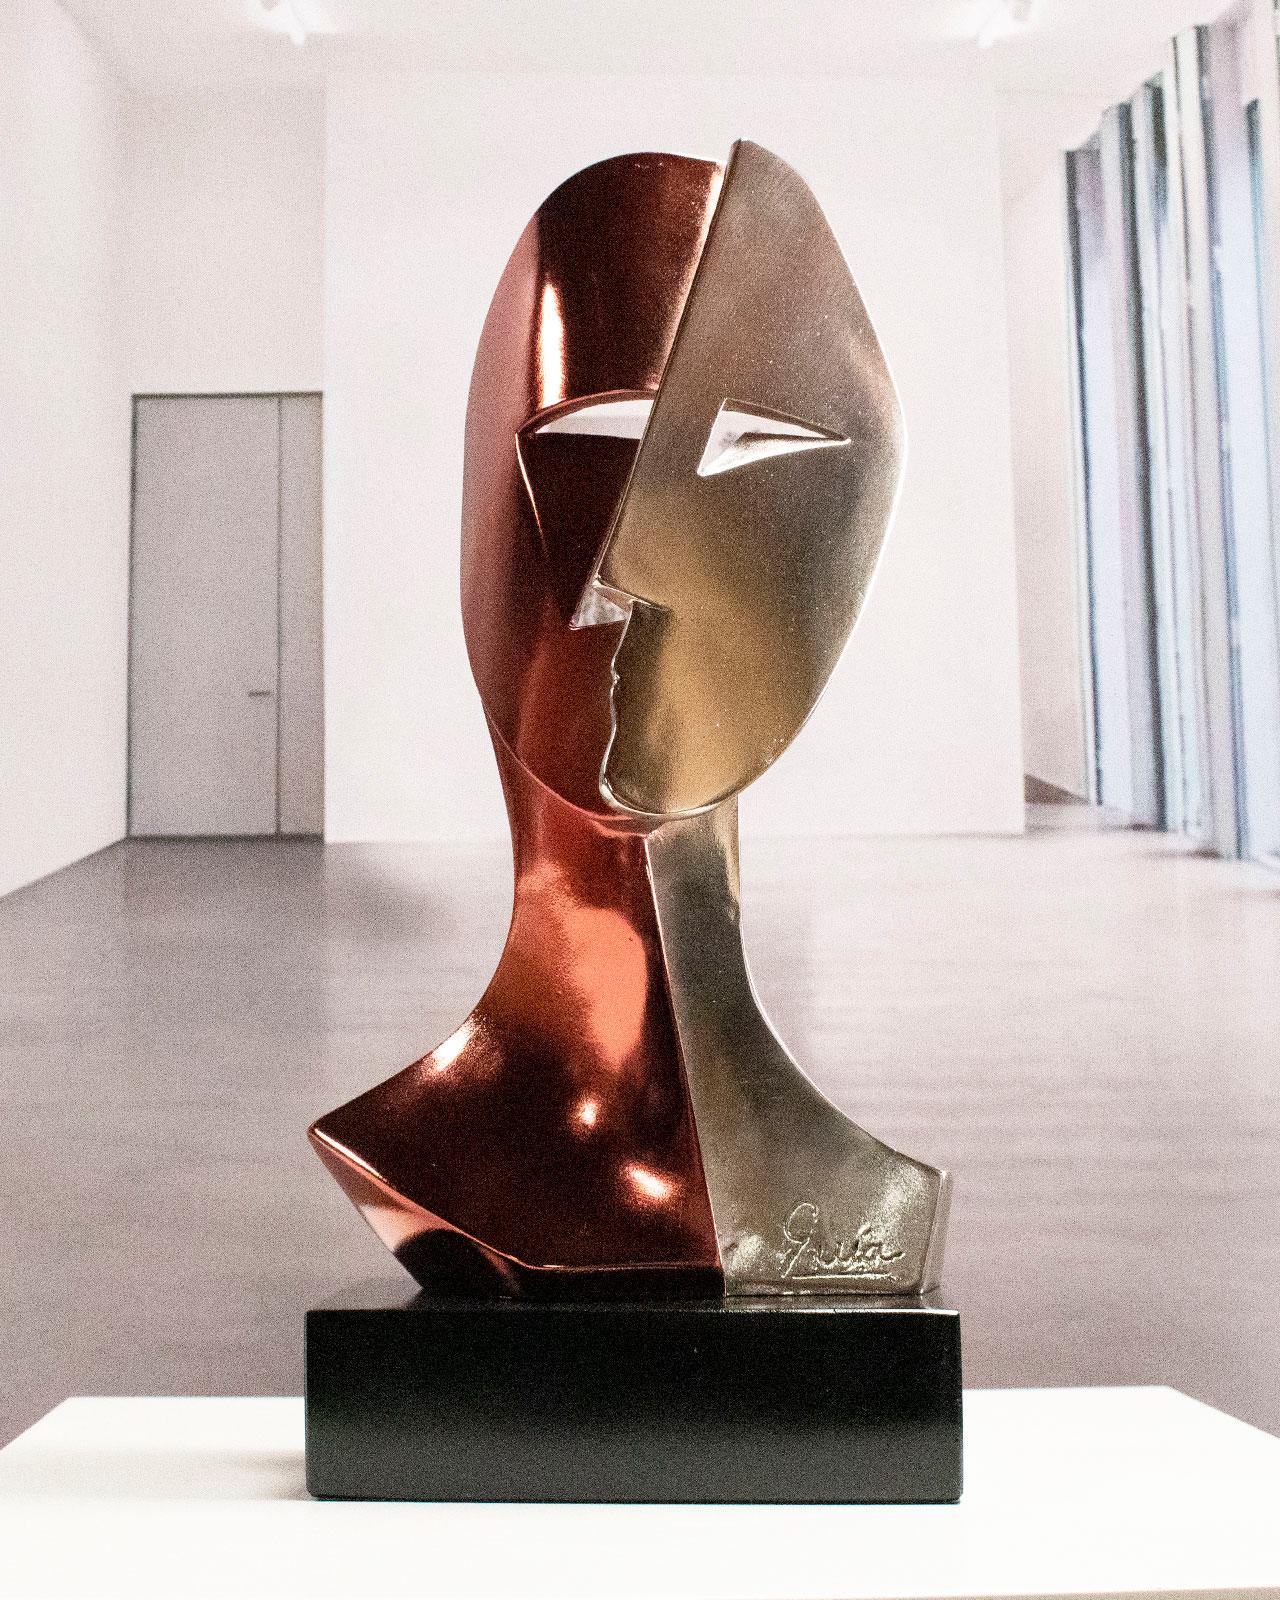 cubist face sculpture